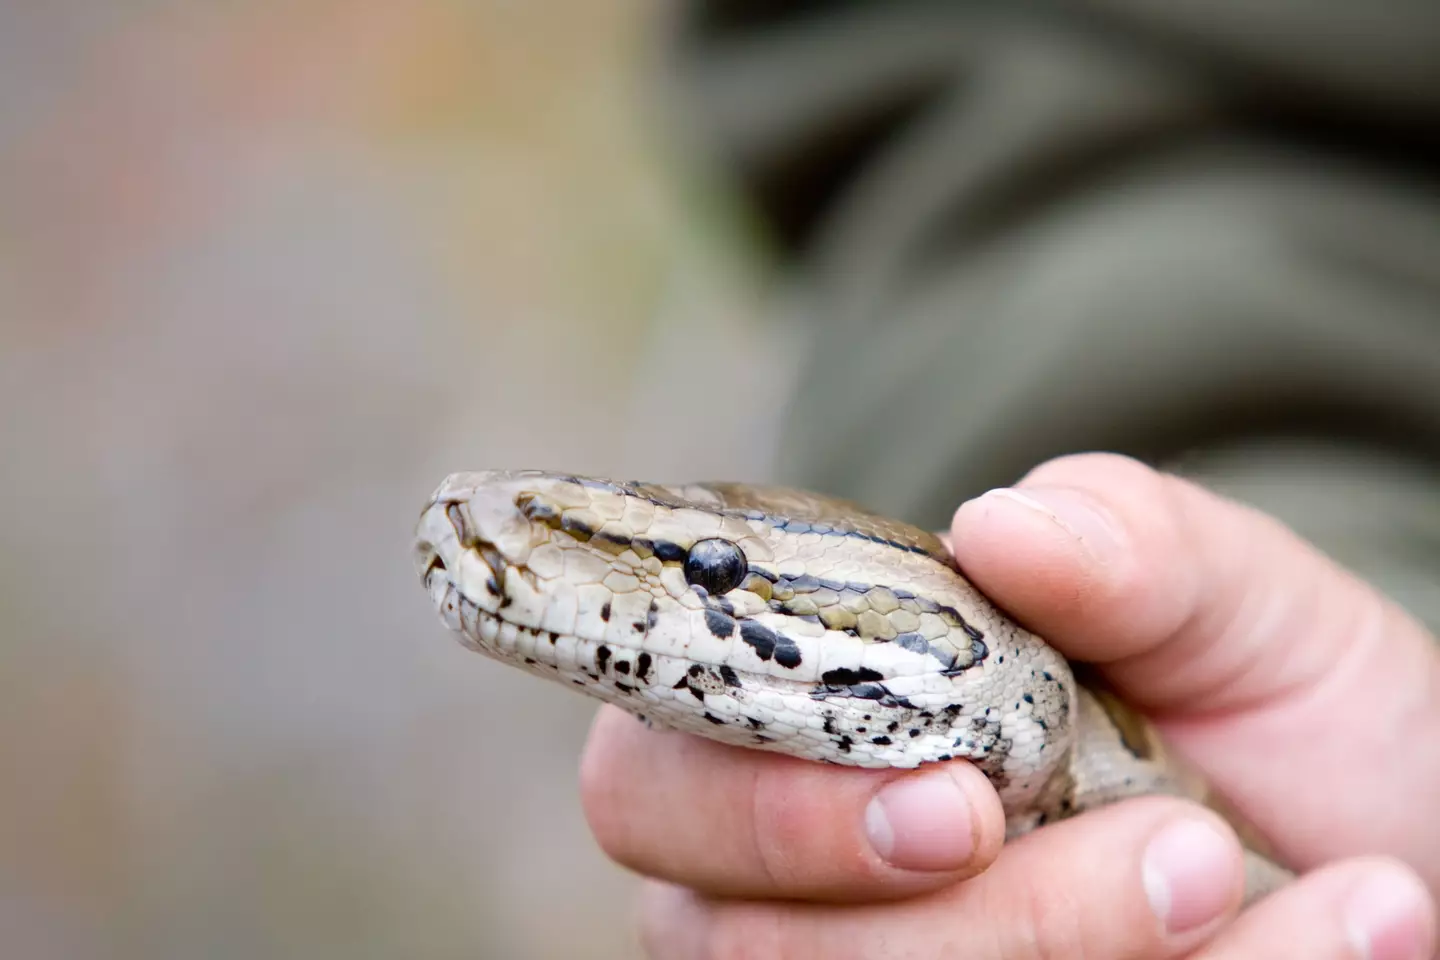 Reptile ownership has increased in the UK.